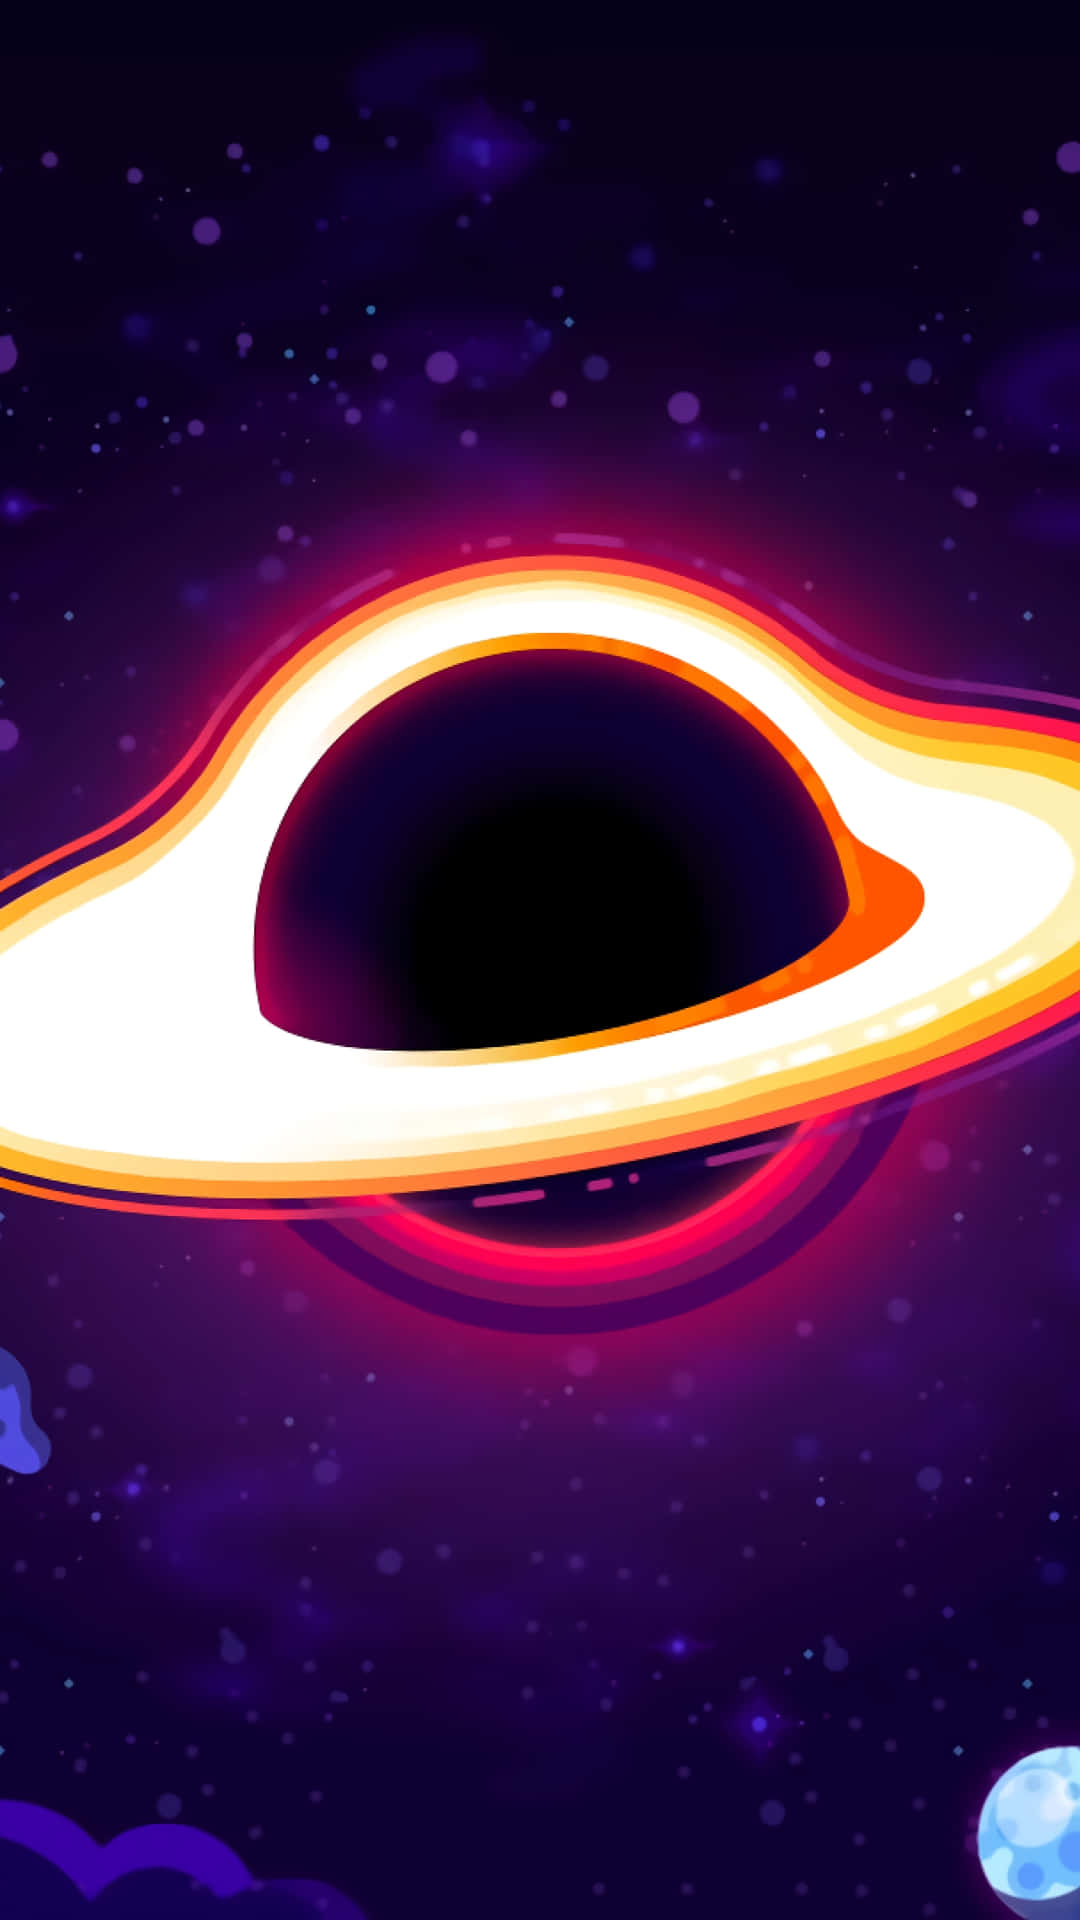 Vibrant Space Black Hole Illustration Wallpaper